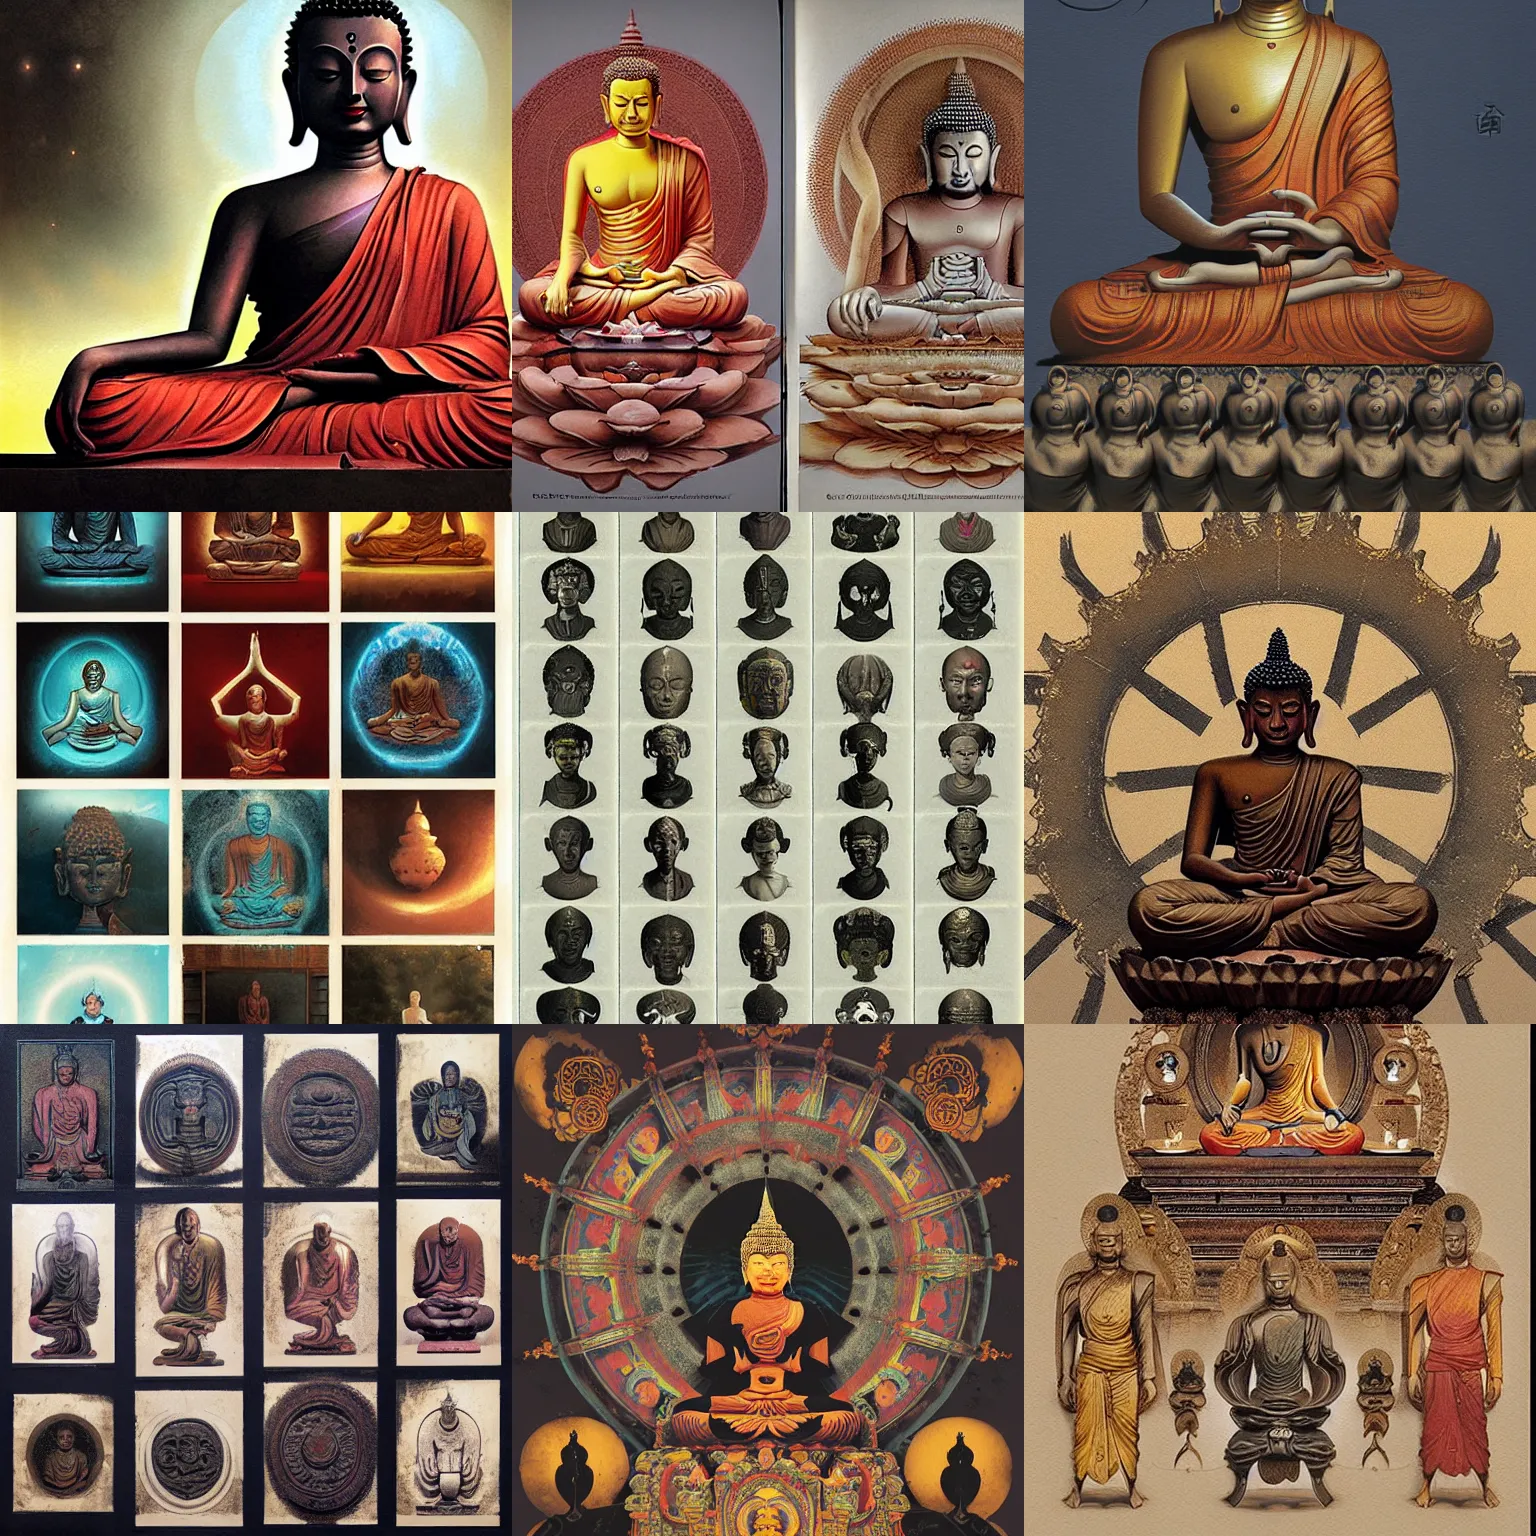 Prompt: buddhism symbols by greg rutkowski and james gurney.